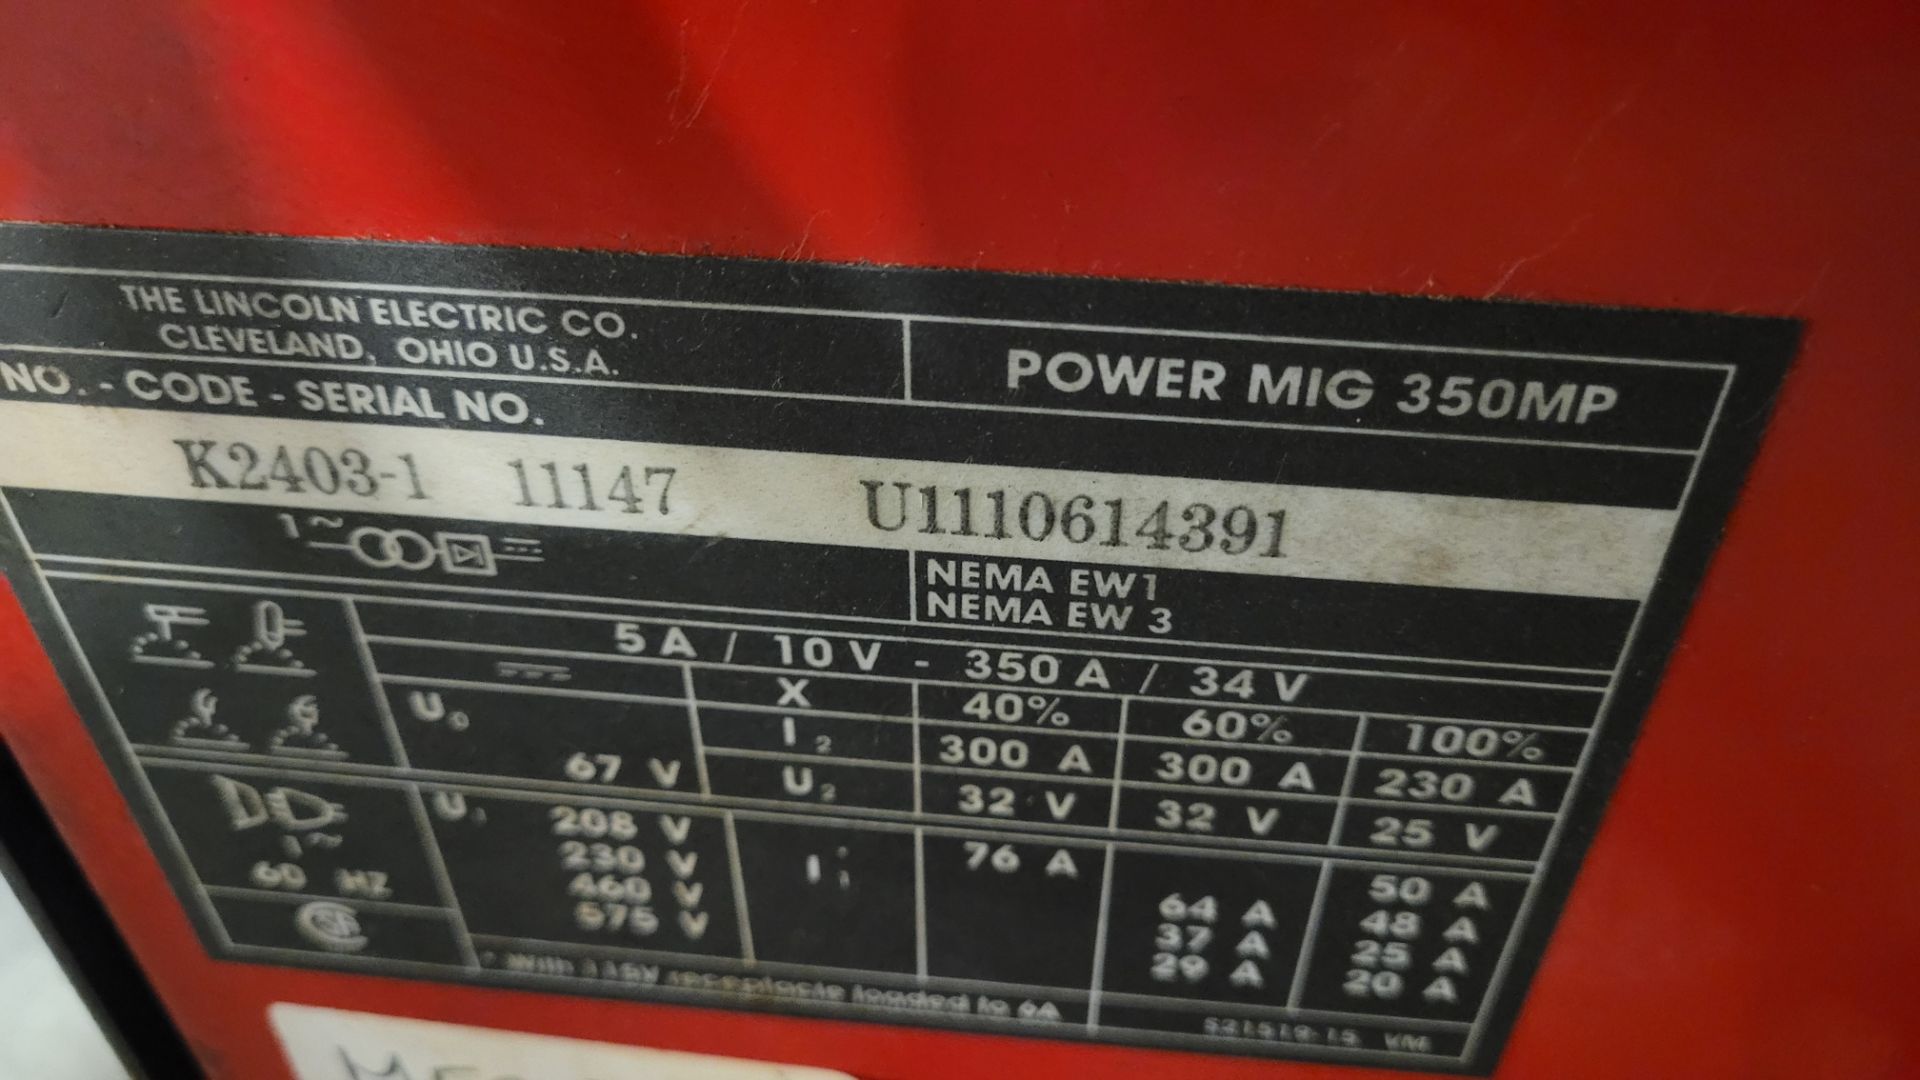 LINCOLN ELECTRIC 350 MP POWER MIG WELDER, CODE K2403-1 11147, S/N U1110614391 - Image 4 of 4